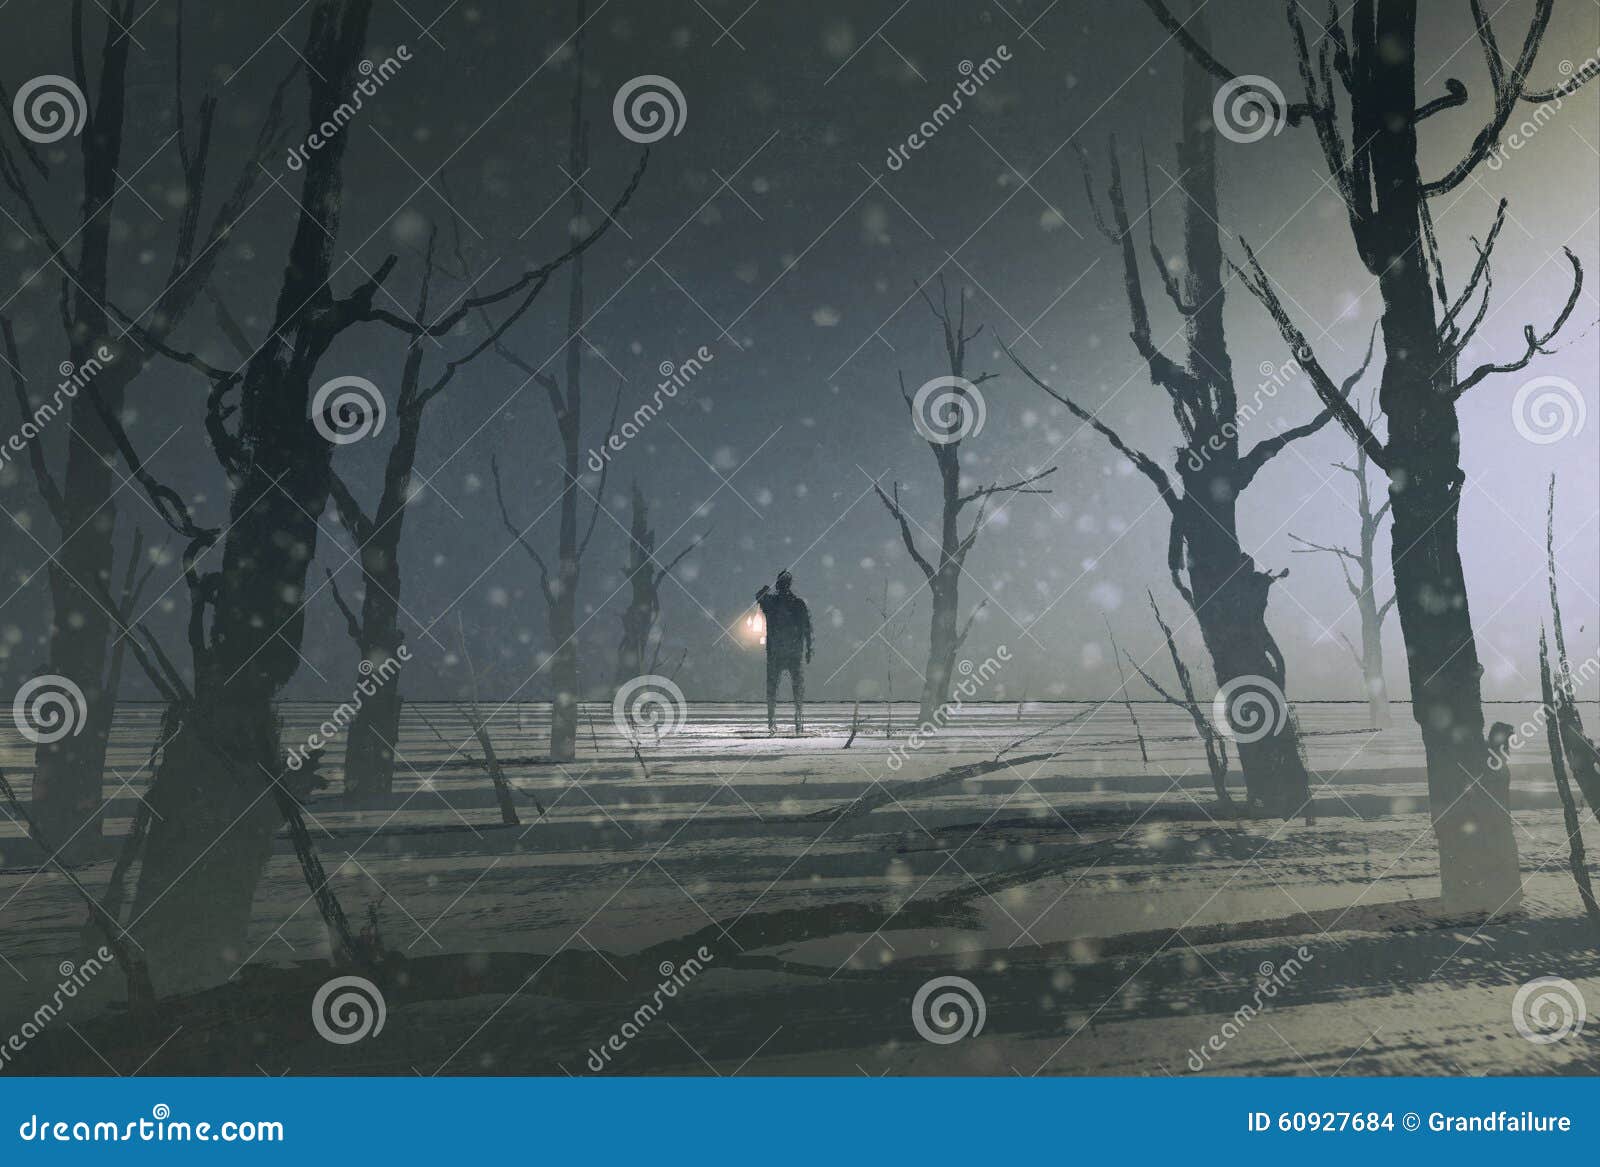 man holding lantern stands in dark forest with fog